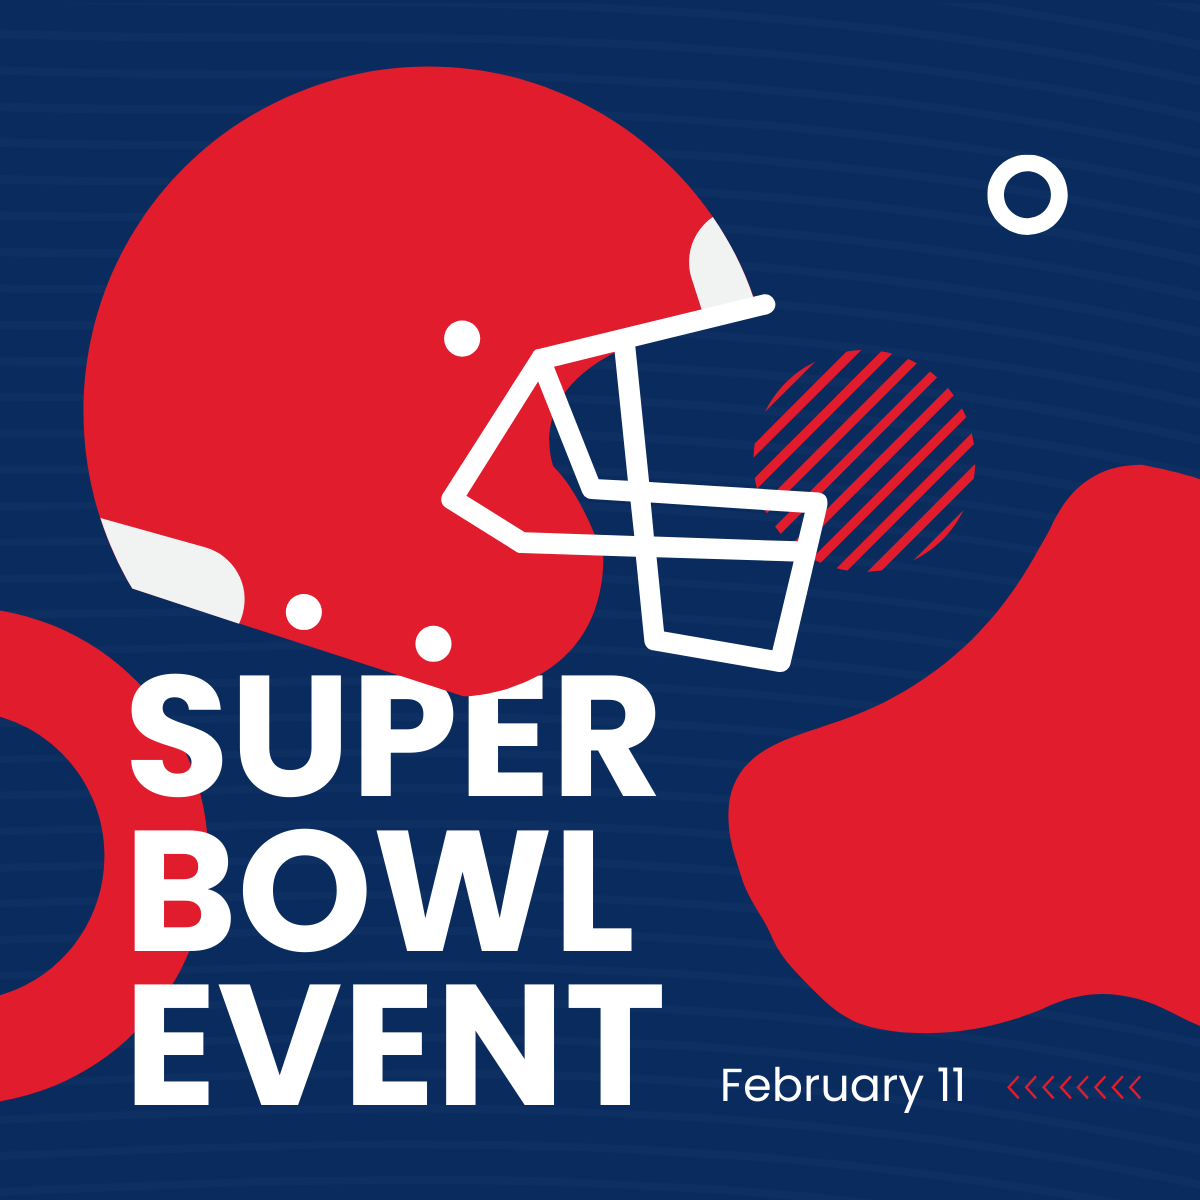 Super Bowl Event Linkedin Post Template